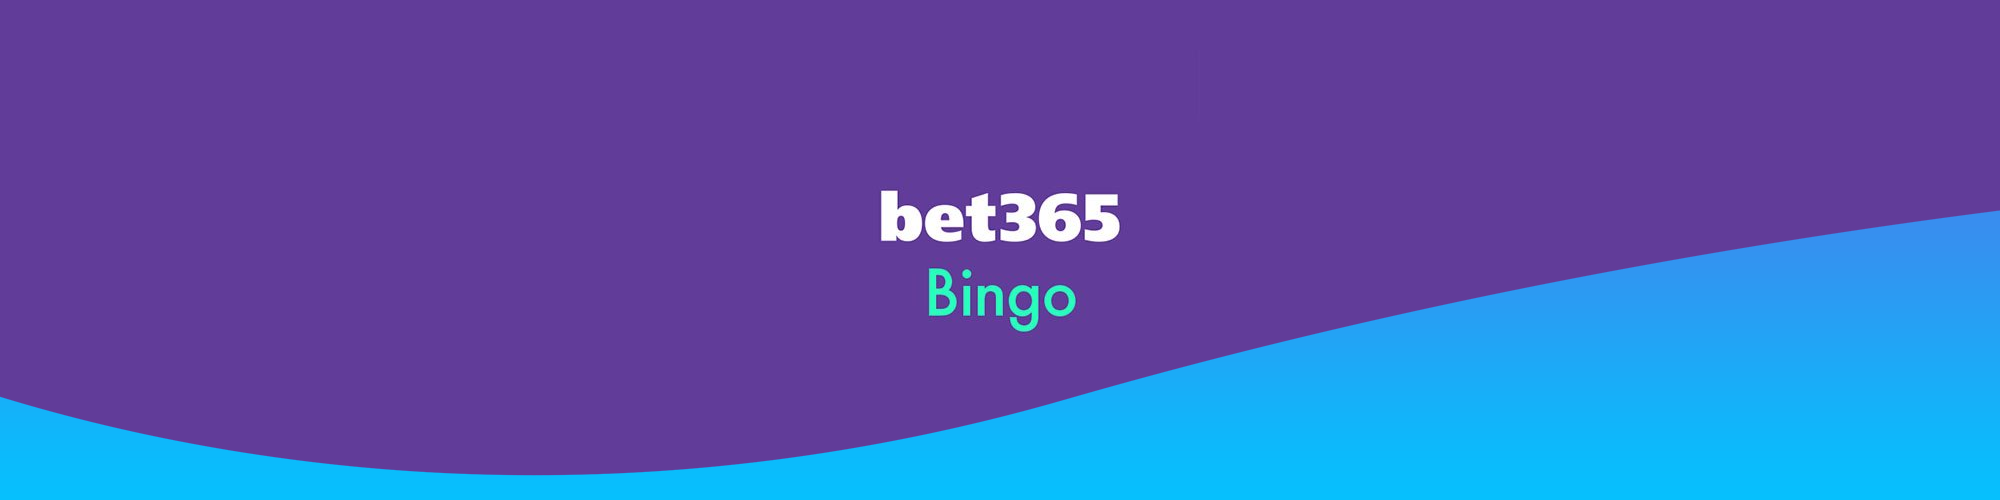 Bet365 Bingo Alternative on EazeGames